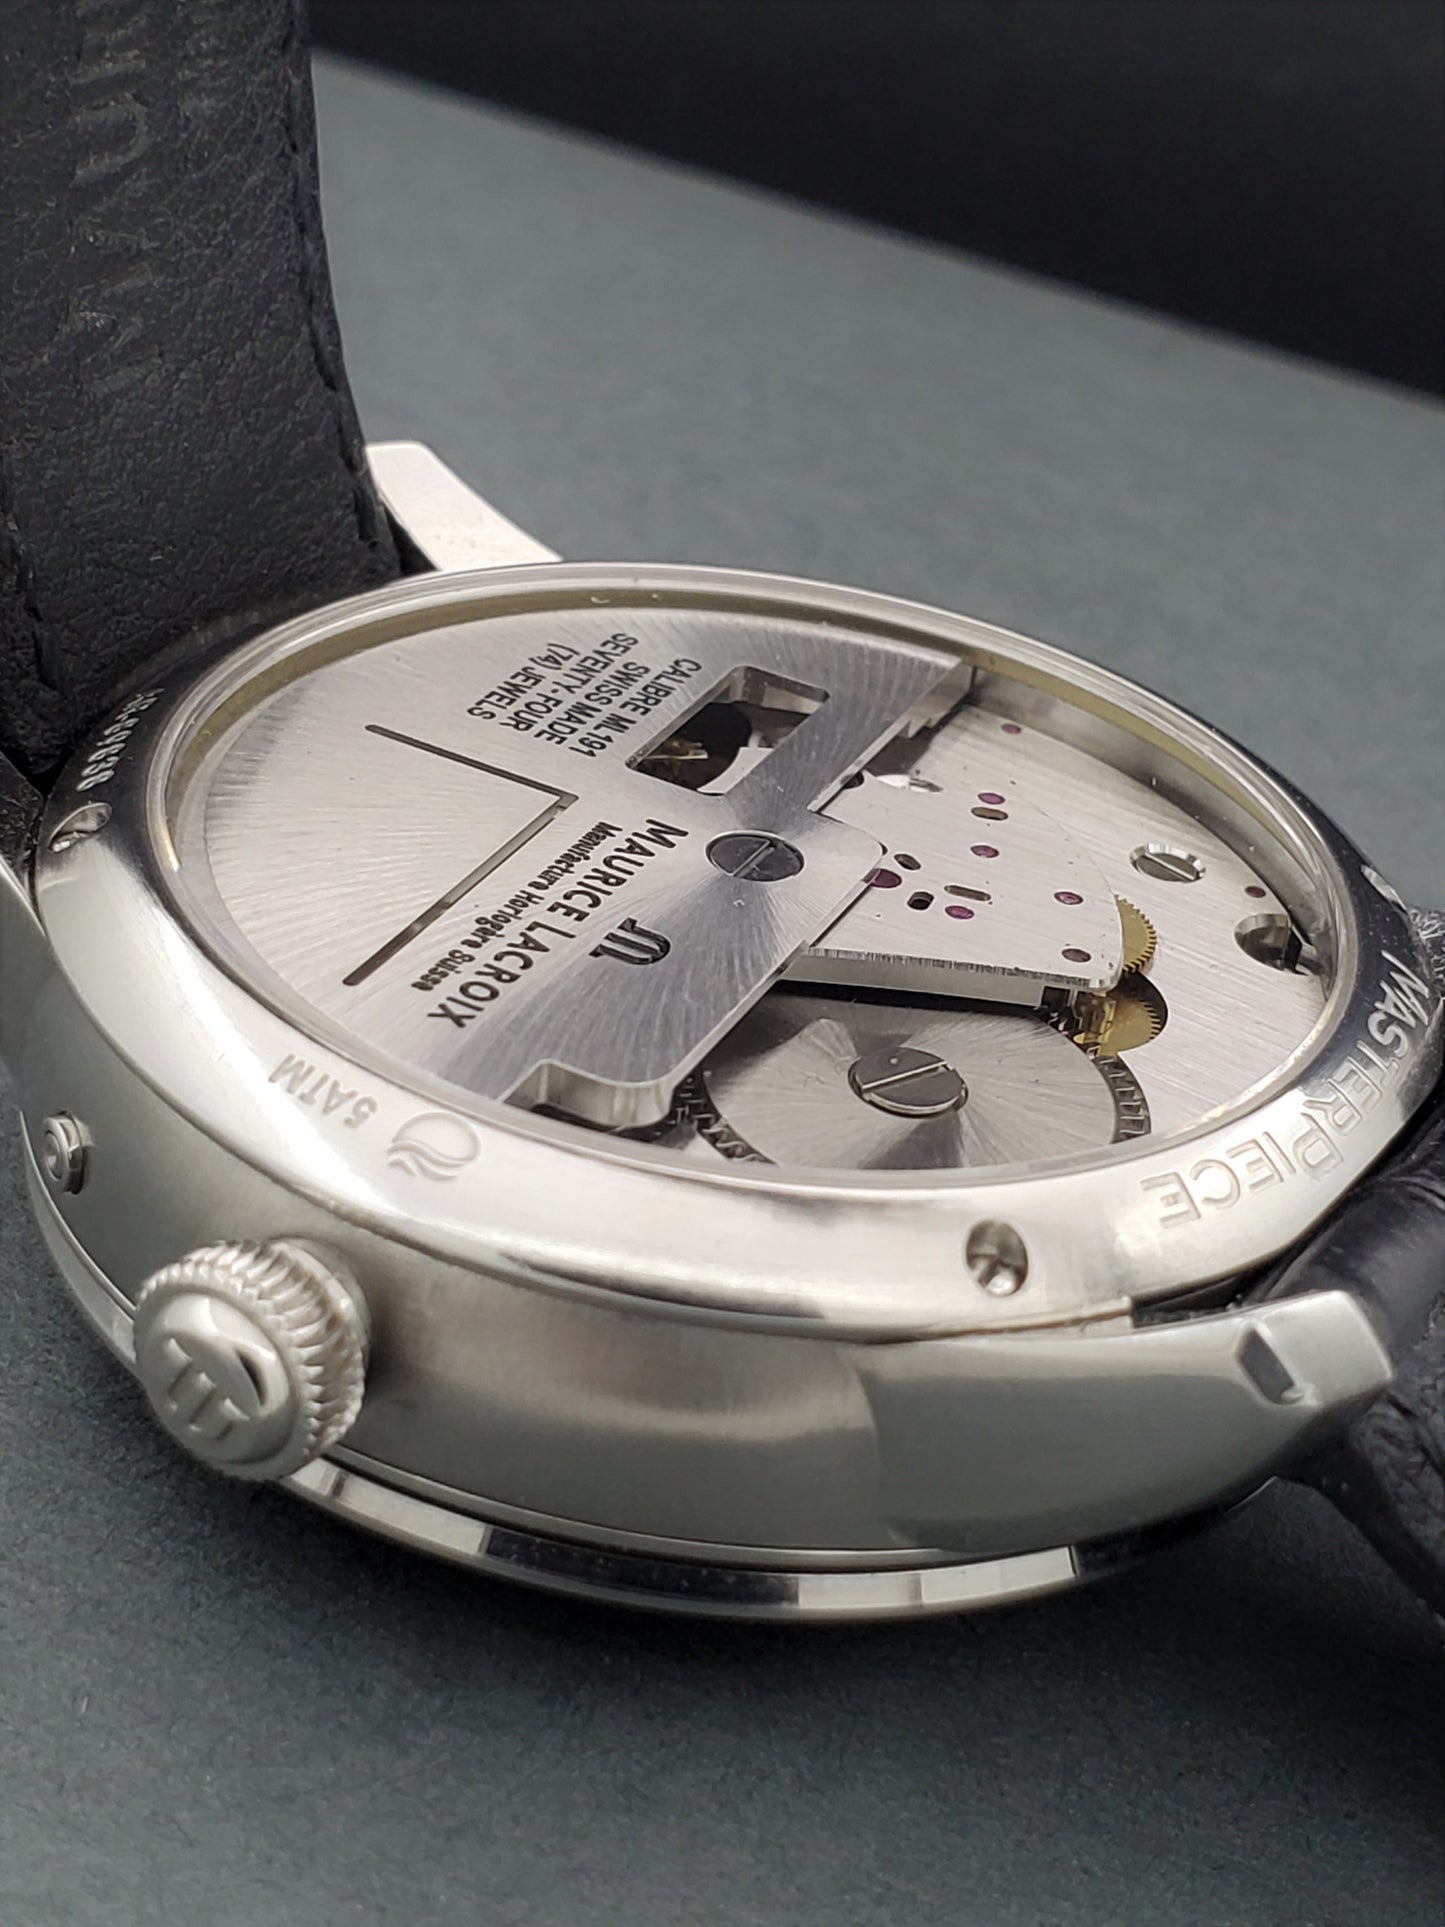 Marice Lacroix Masterpiece Calendrier Retrograde Watch MP6518